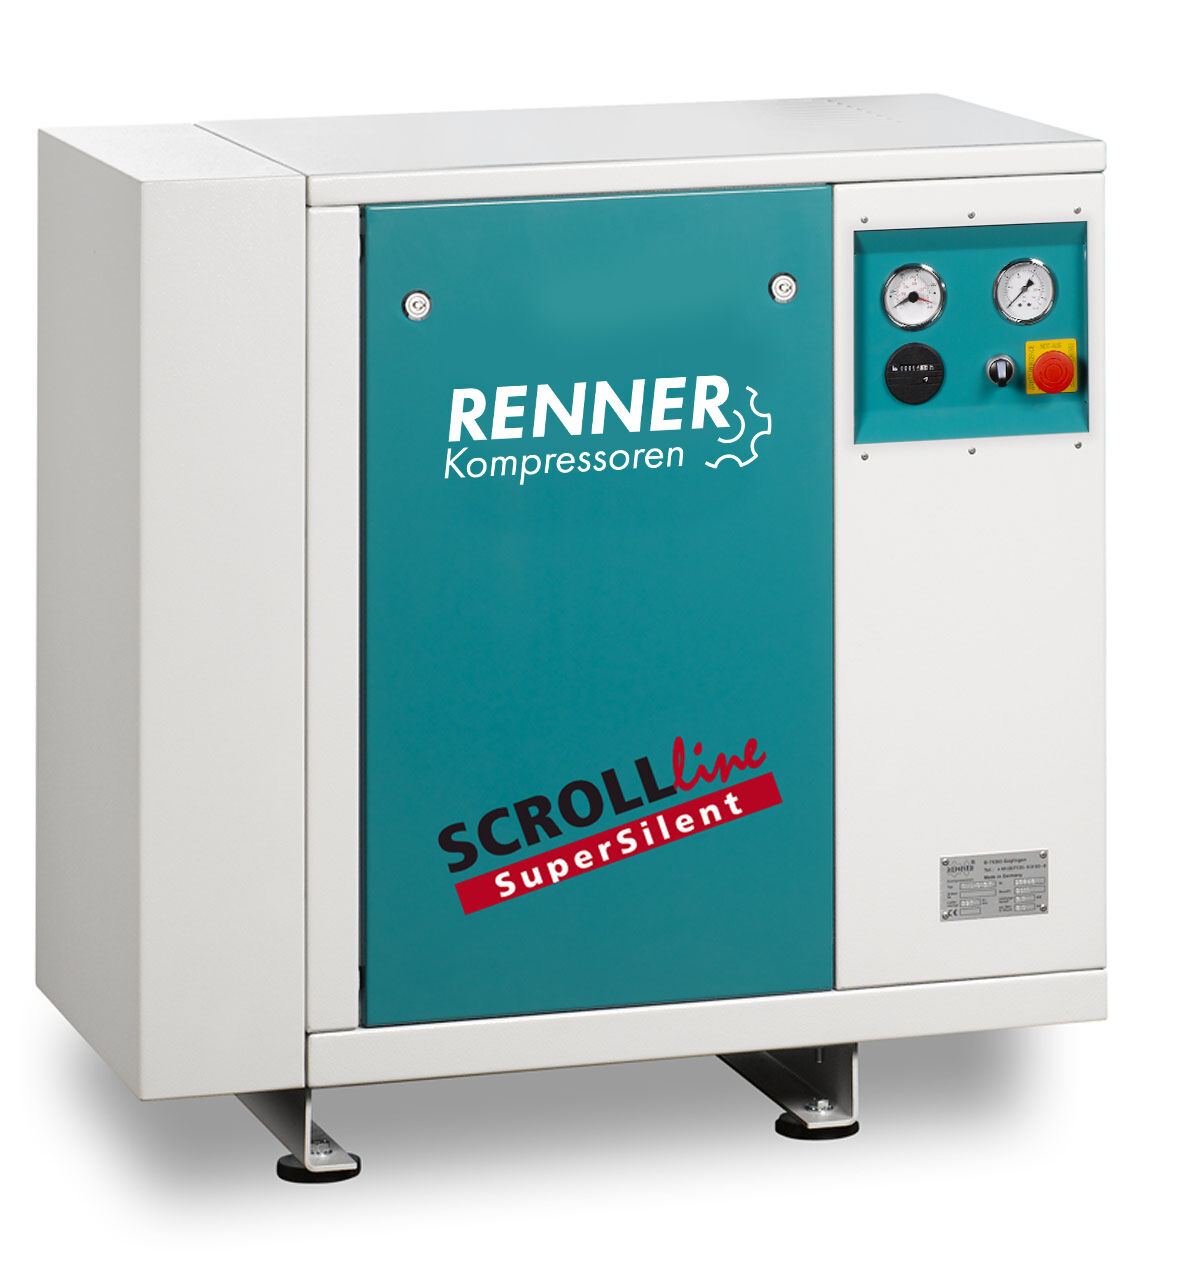 RENNER-Kompressor SL-S 4,5  - SuperSilent ölfreier Scrollkompressor